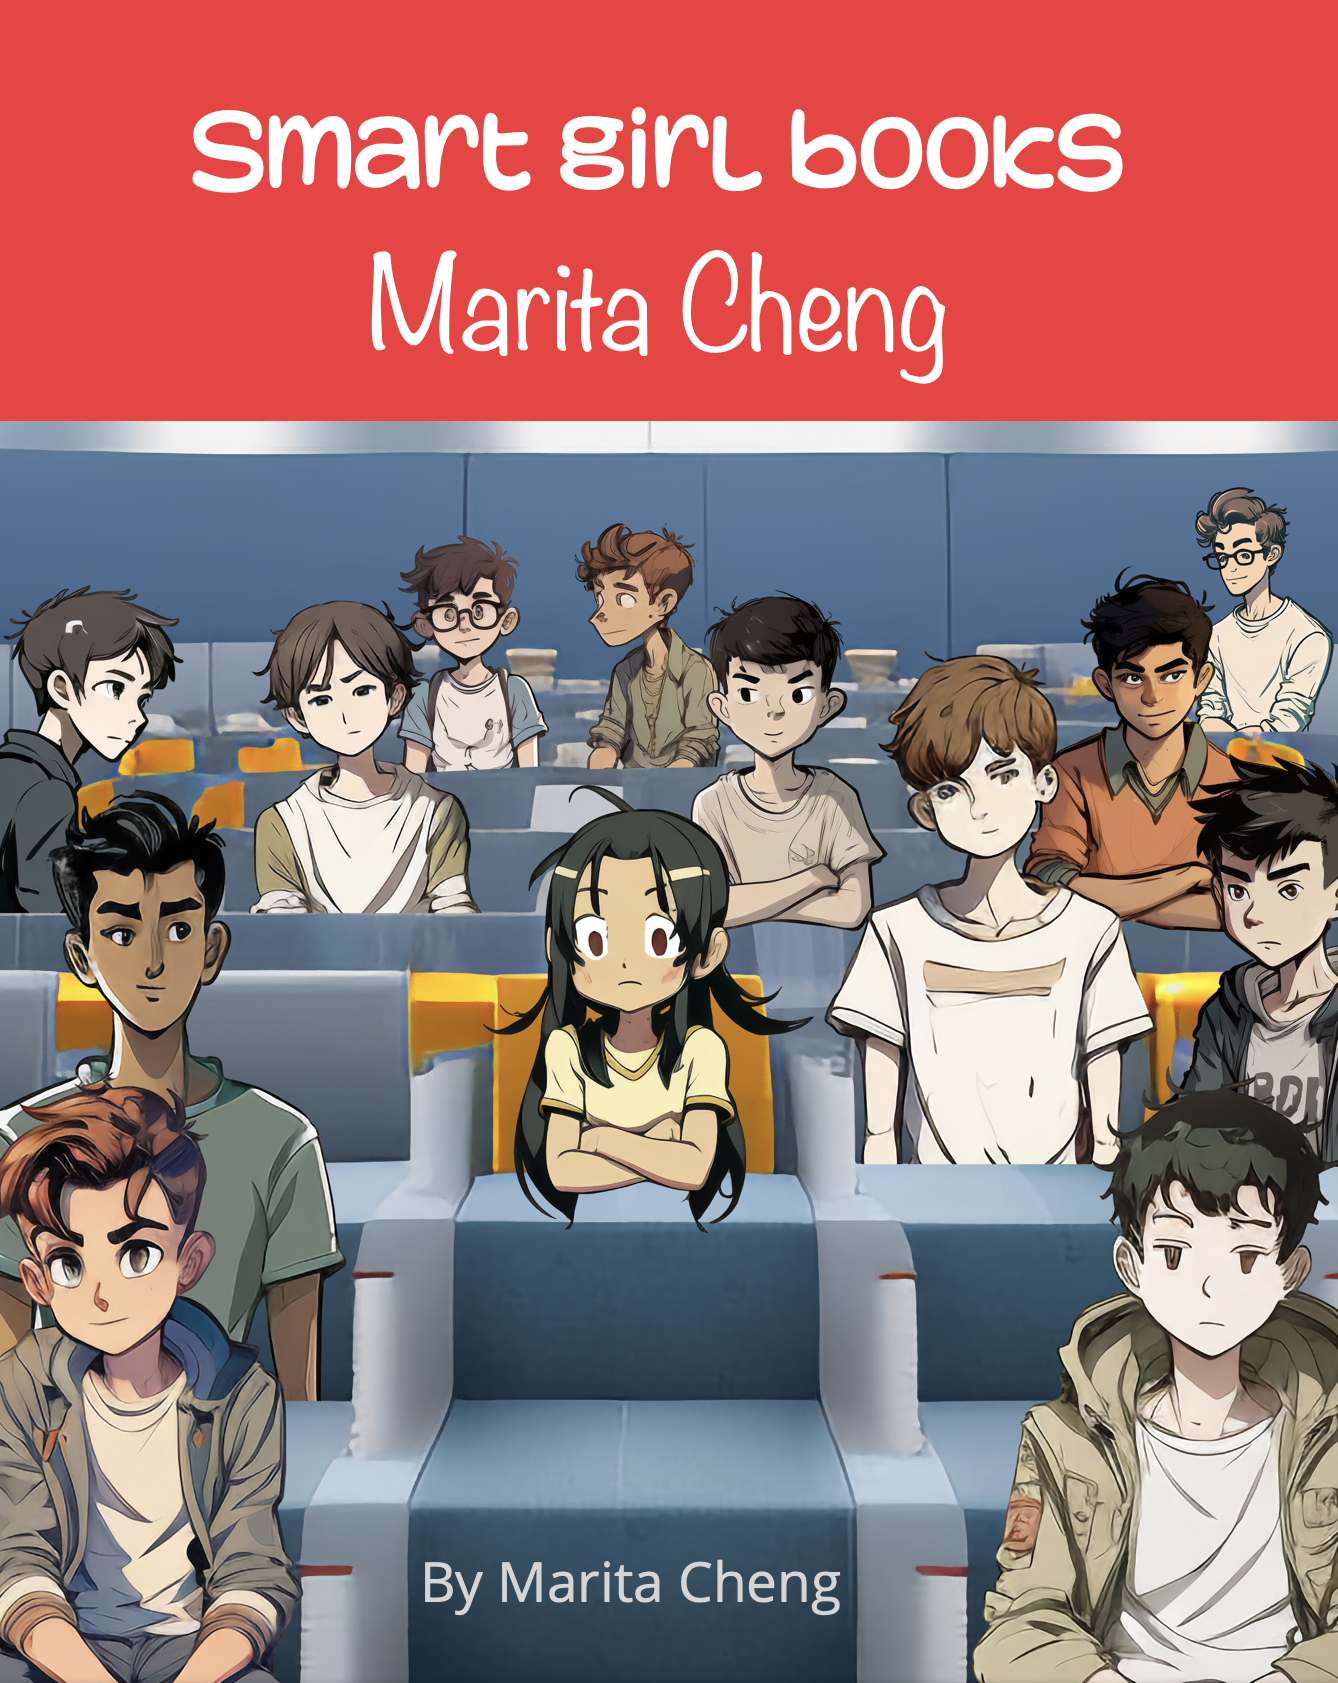 A book cover for Smart Girls: Marita Cheng